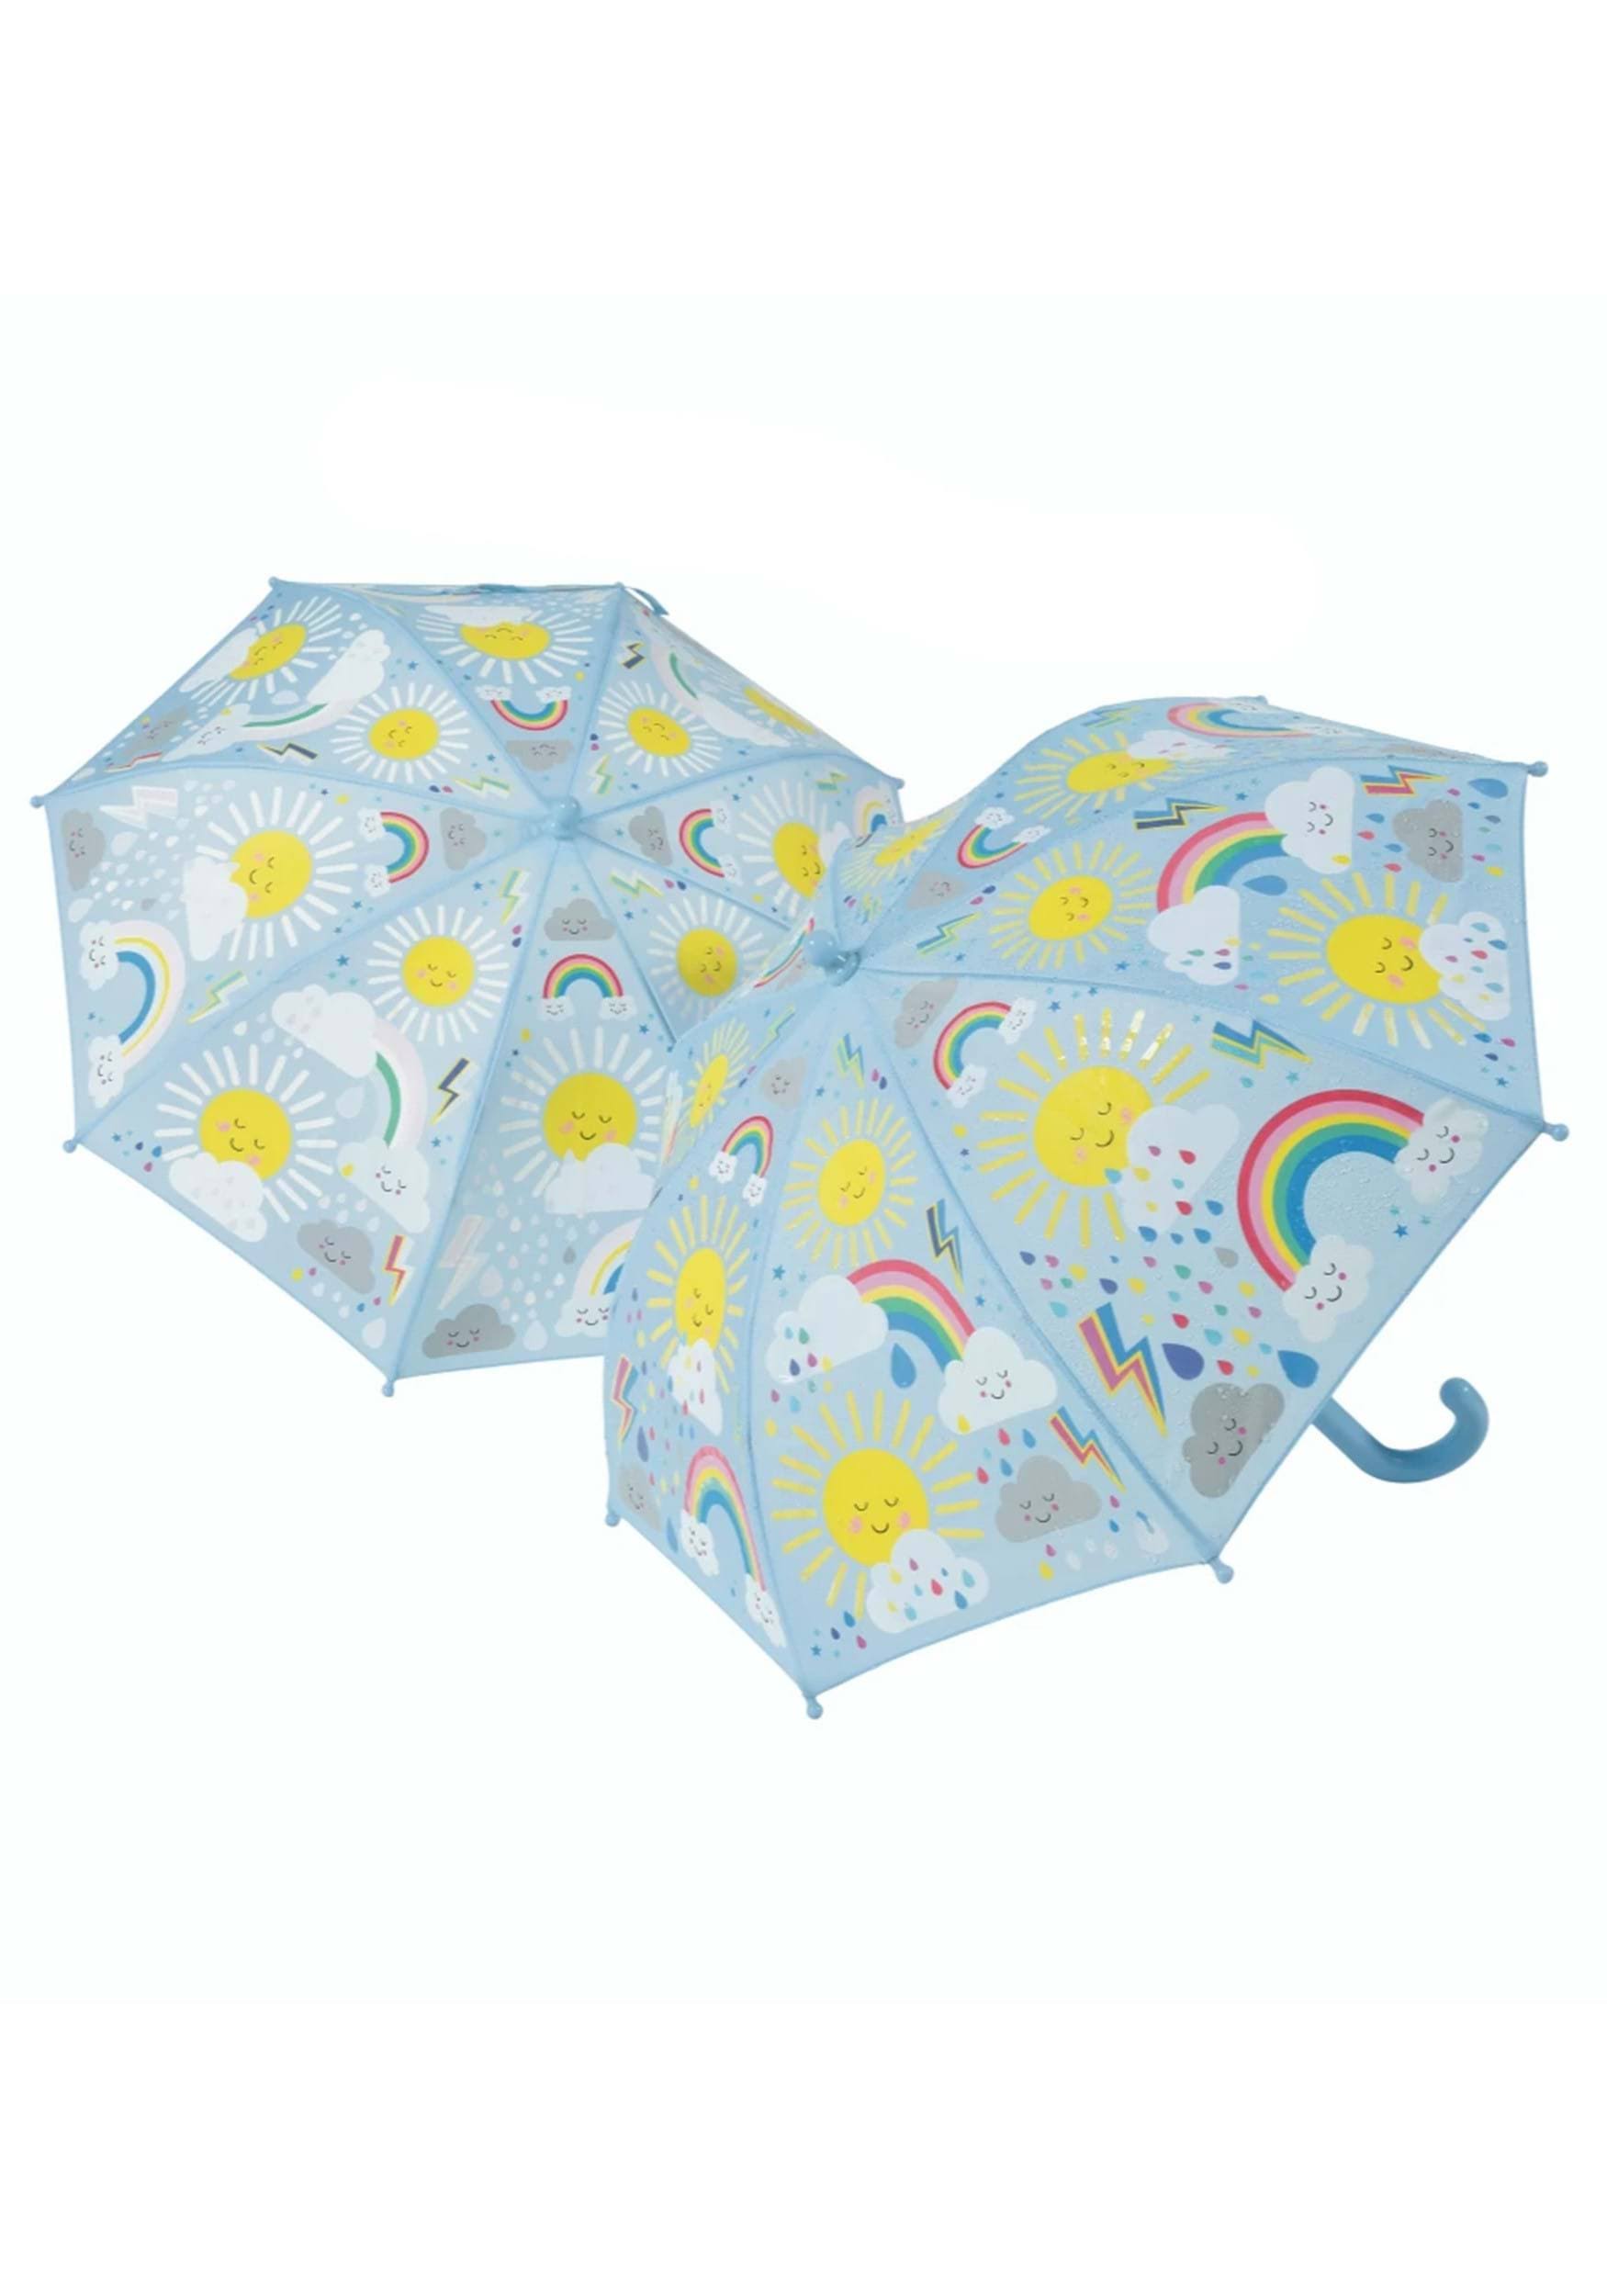 Floss & Rock Colour Changing Umbrella - Sun & Clouds